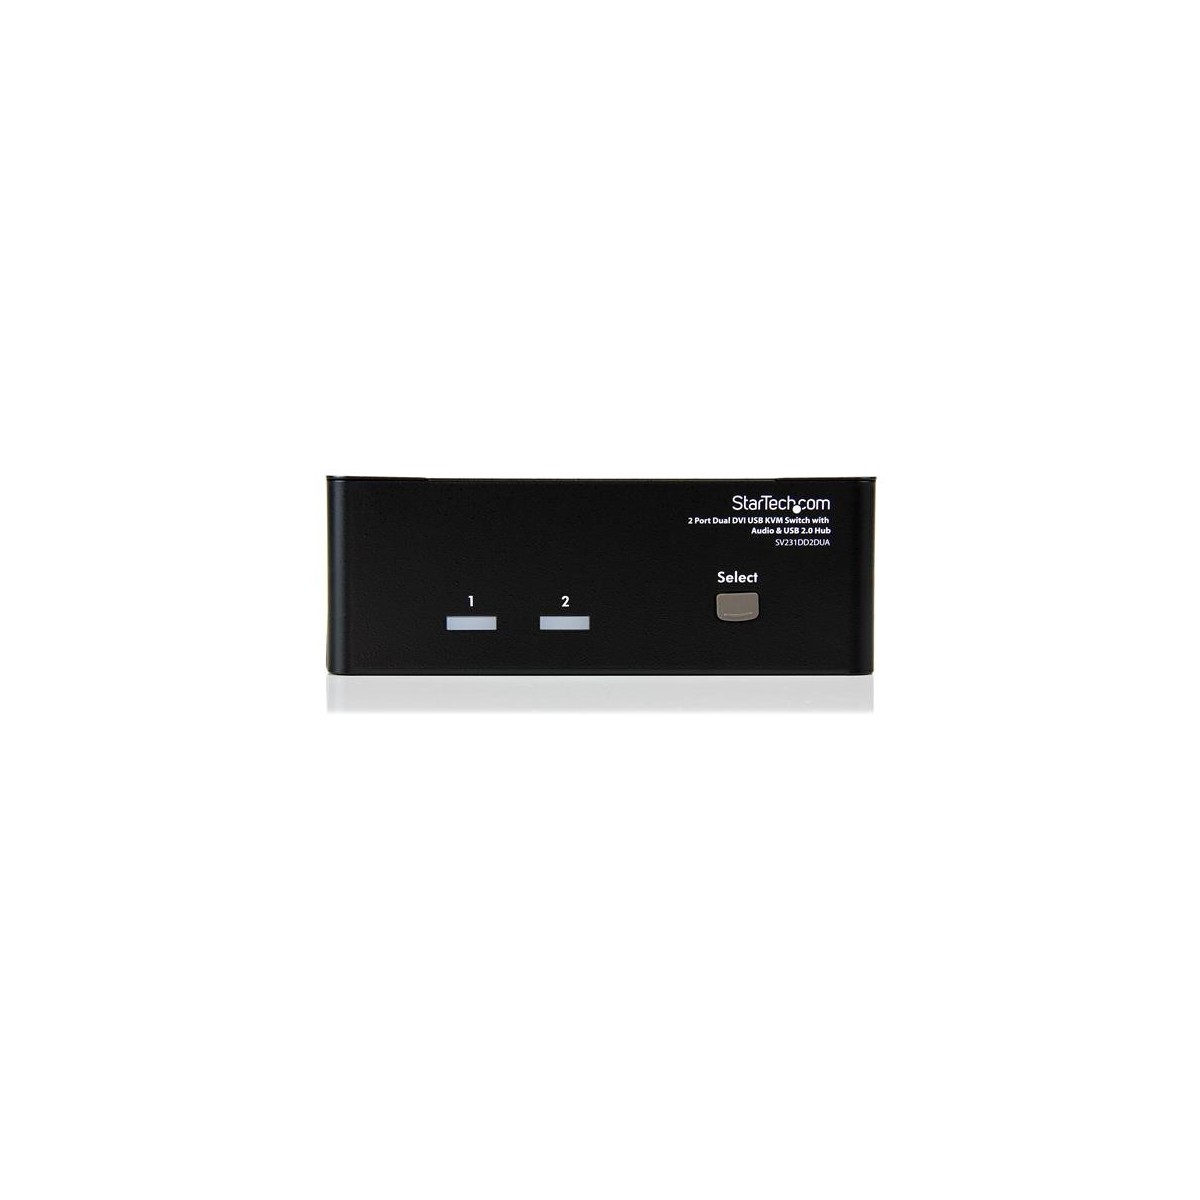 StarTech.com 2 Port Dual DVI USB KVM Switch with Audio  USB 2.0 Hub - 2048 x 1536 pixels - Black